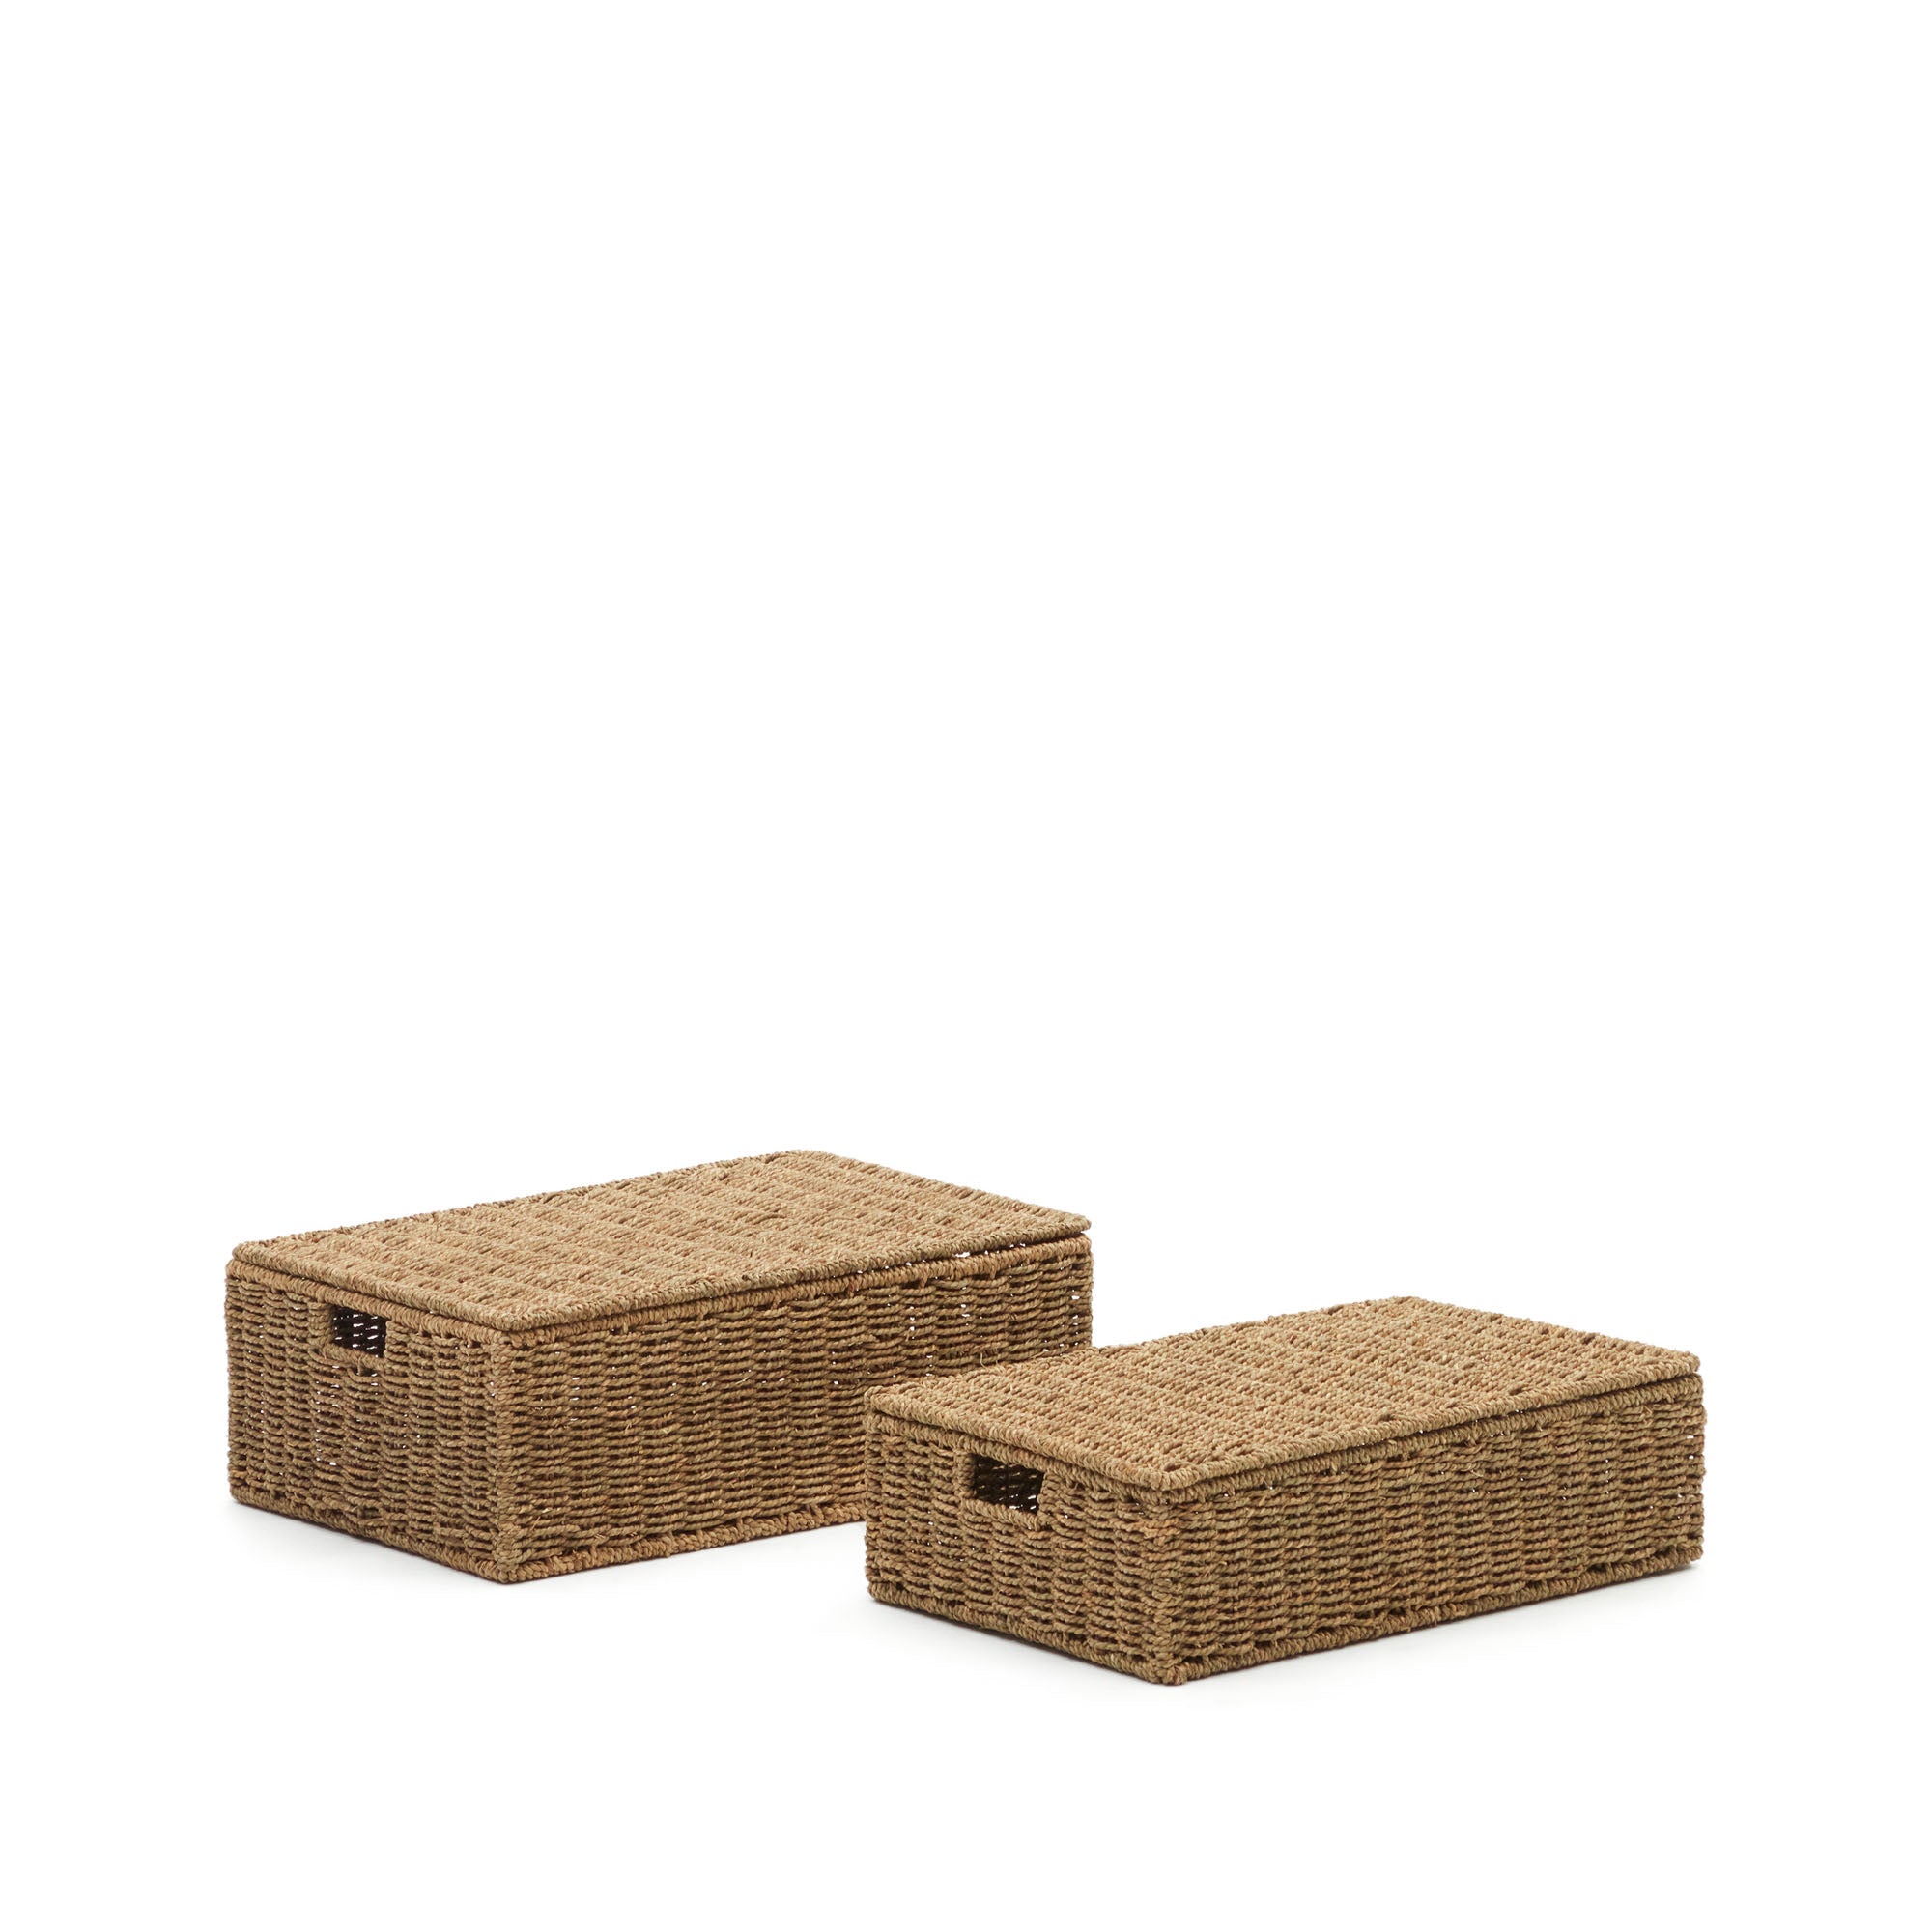 Tossa set of 2 natural fiber baskets with lids, 57 x 36 cm / 60 x 40 cm